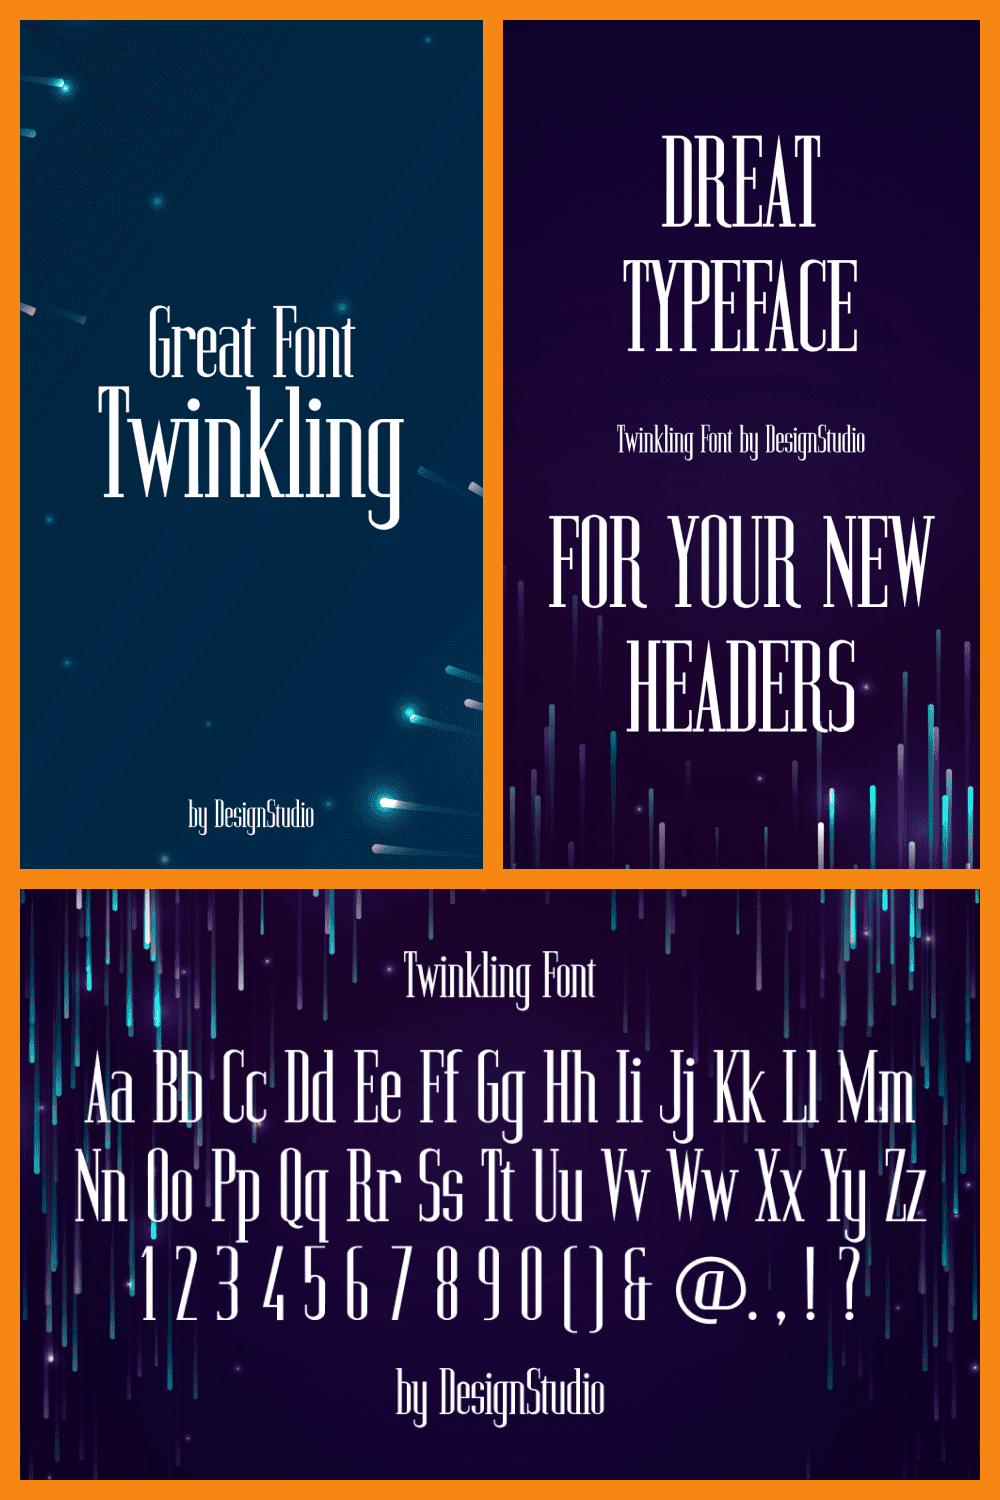 Twinkling monospaced serif font.